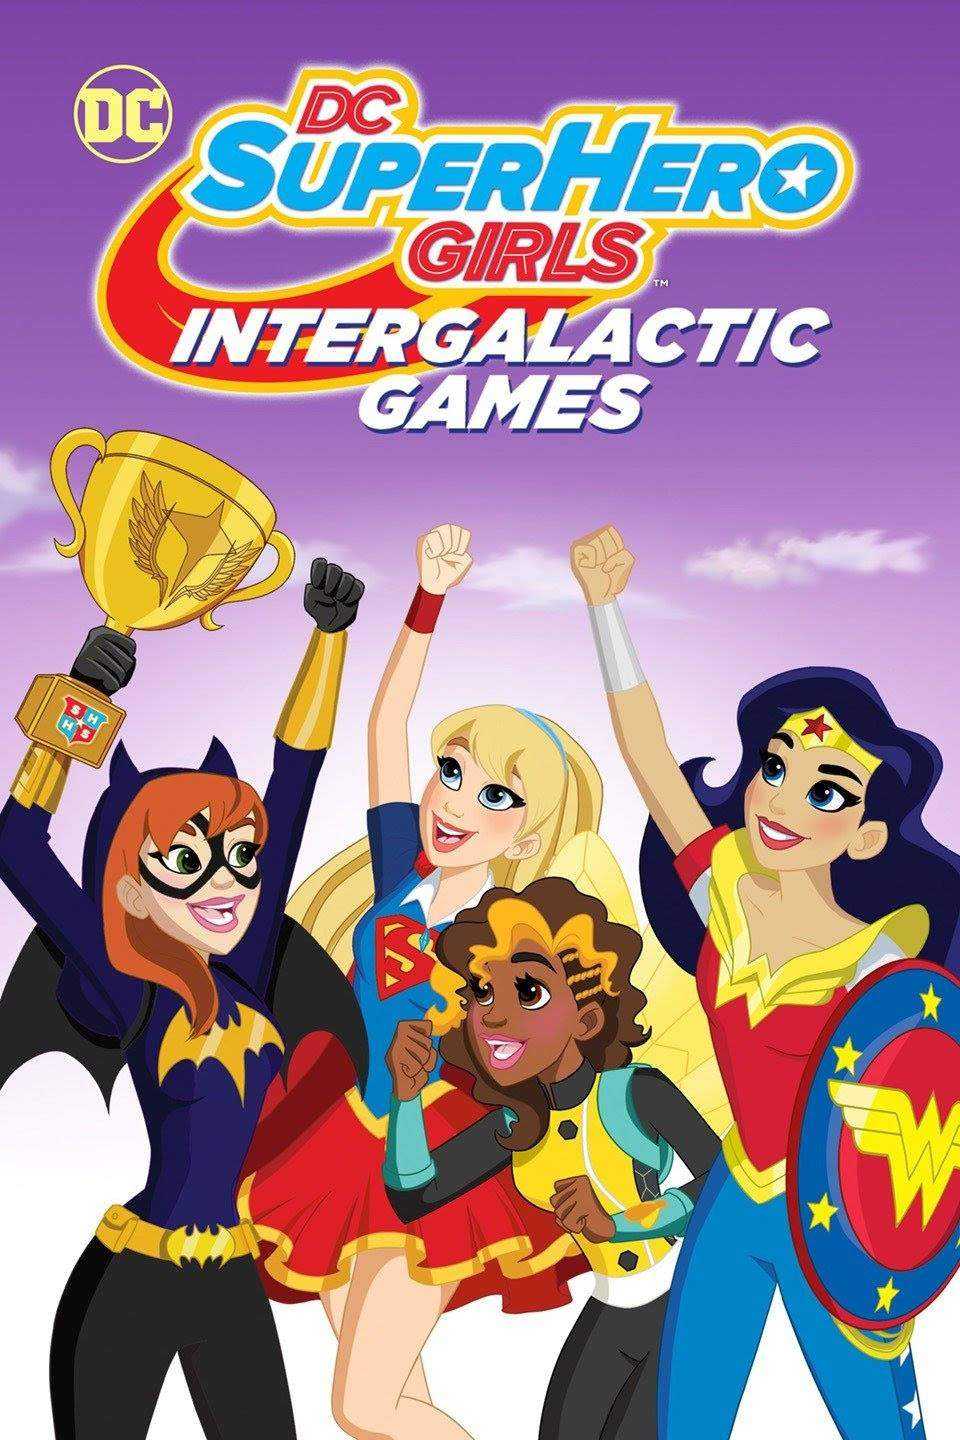 DC Super Hero Girls Intergalactic Games Poster.jpg